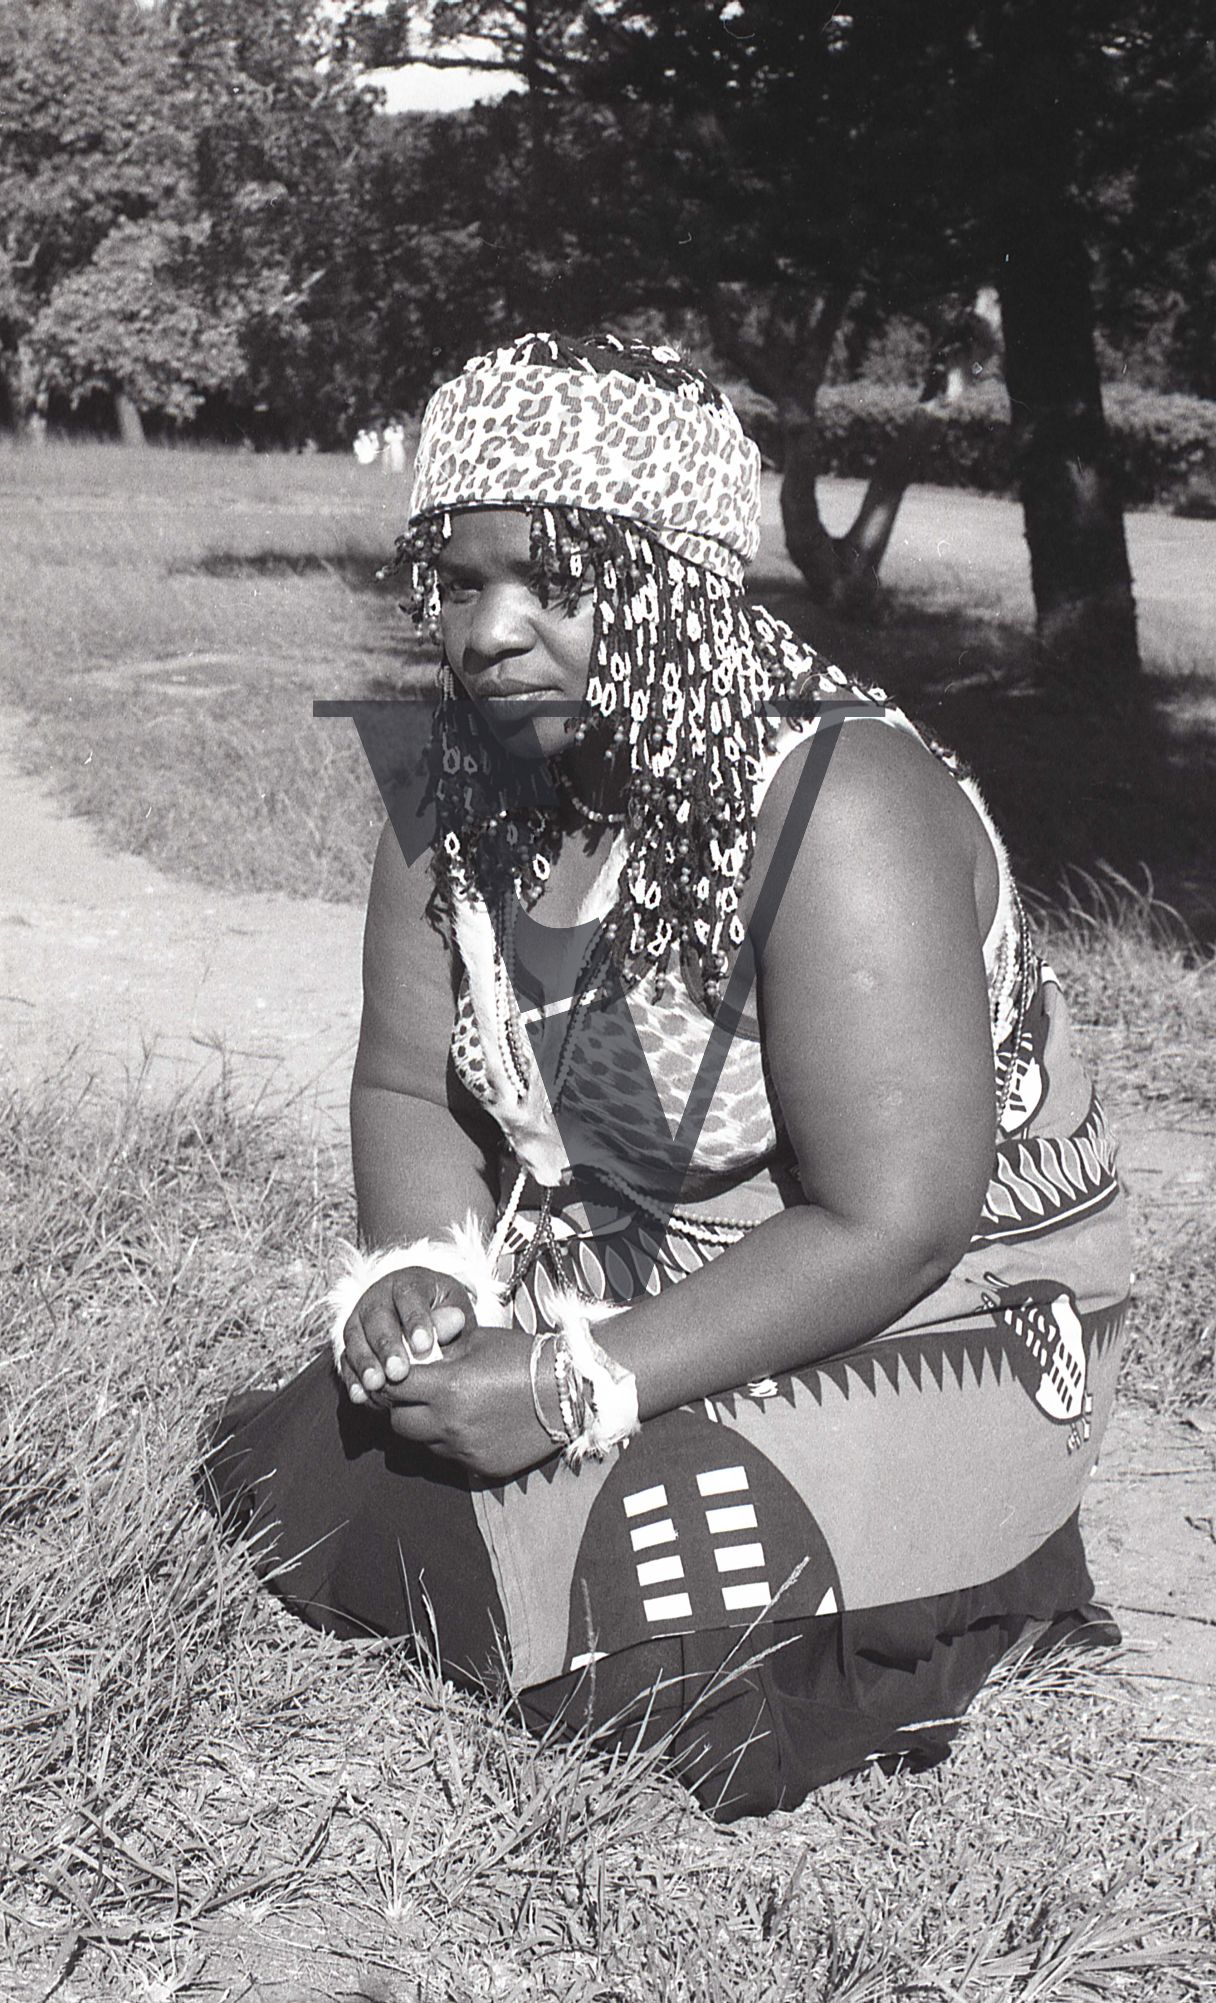 Sangoma, Zululand, Inyanga, black and white portrait, man.